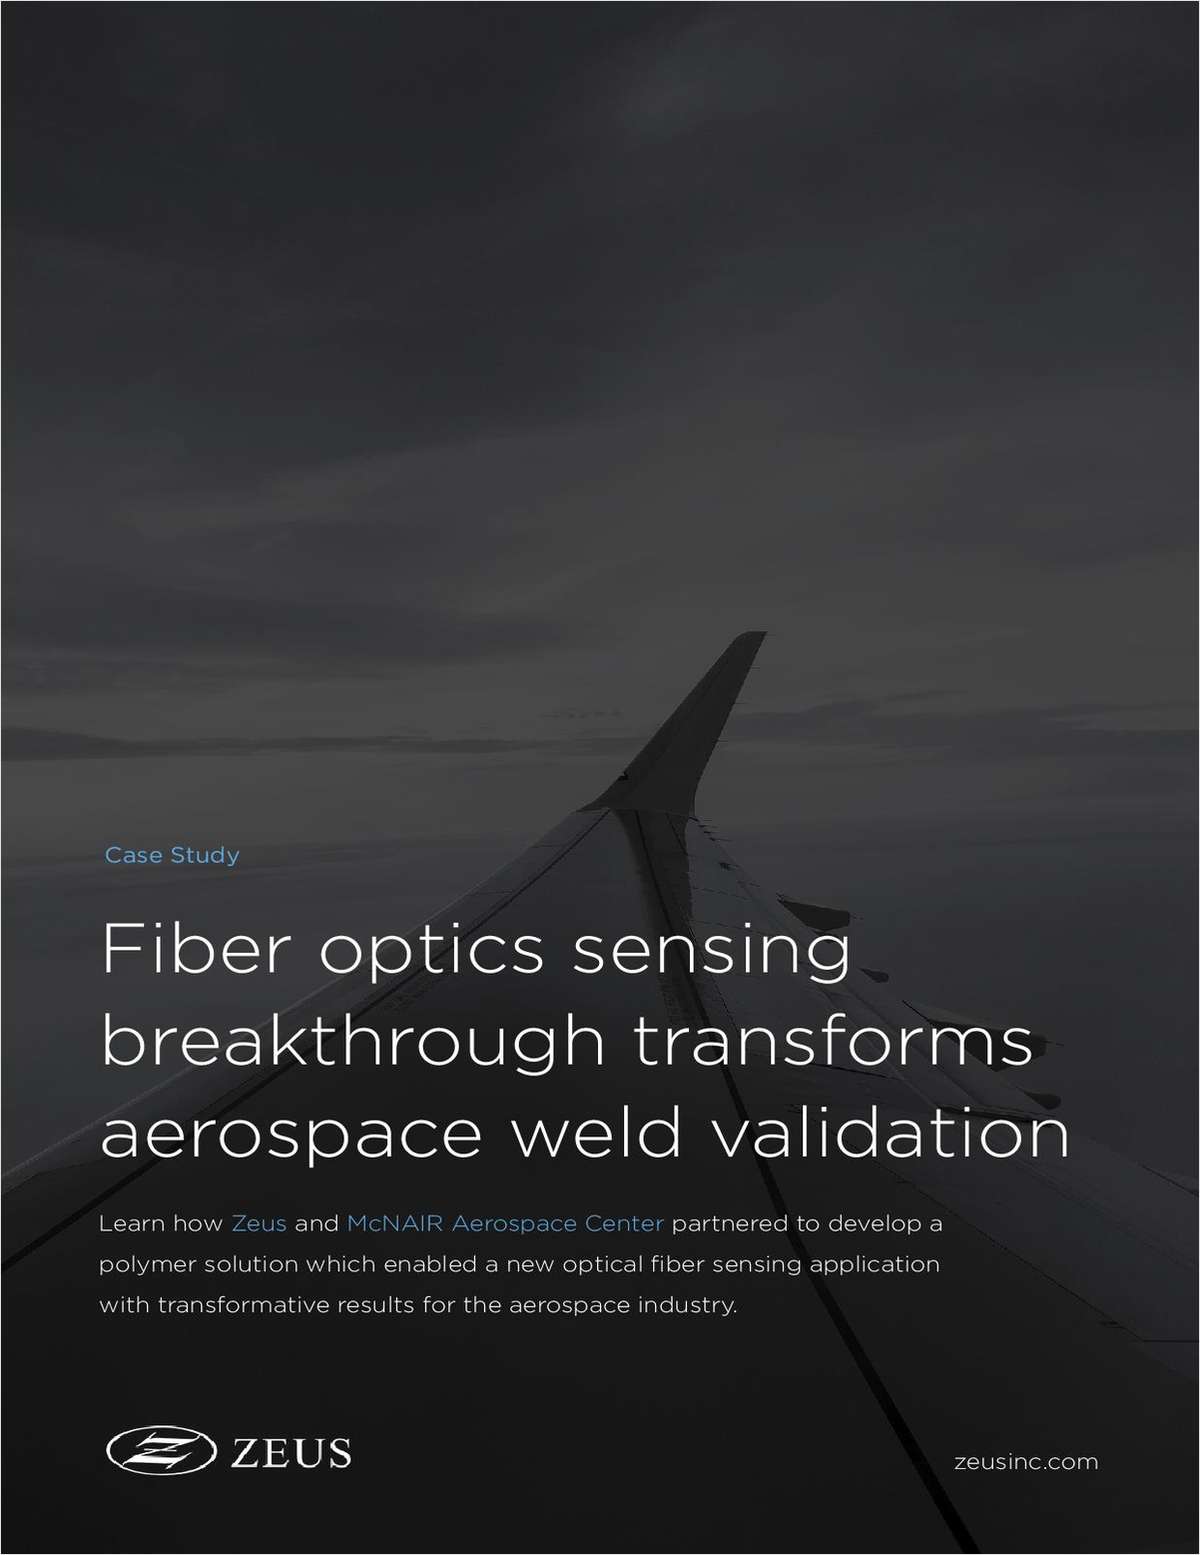 Case study: Fiber optics sensing breakthrough transforms aerospace weld validation